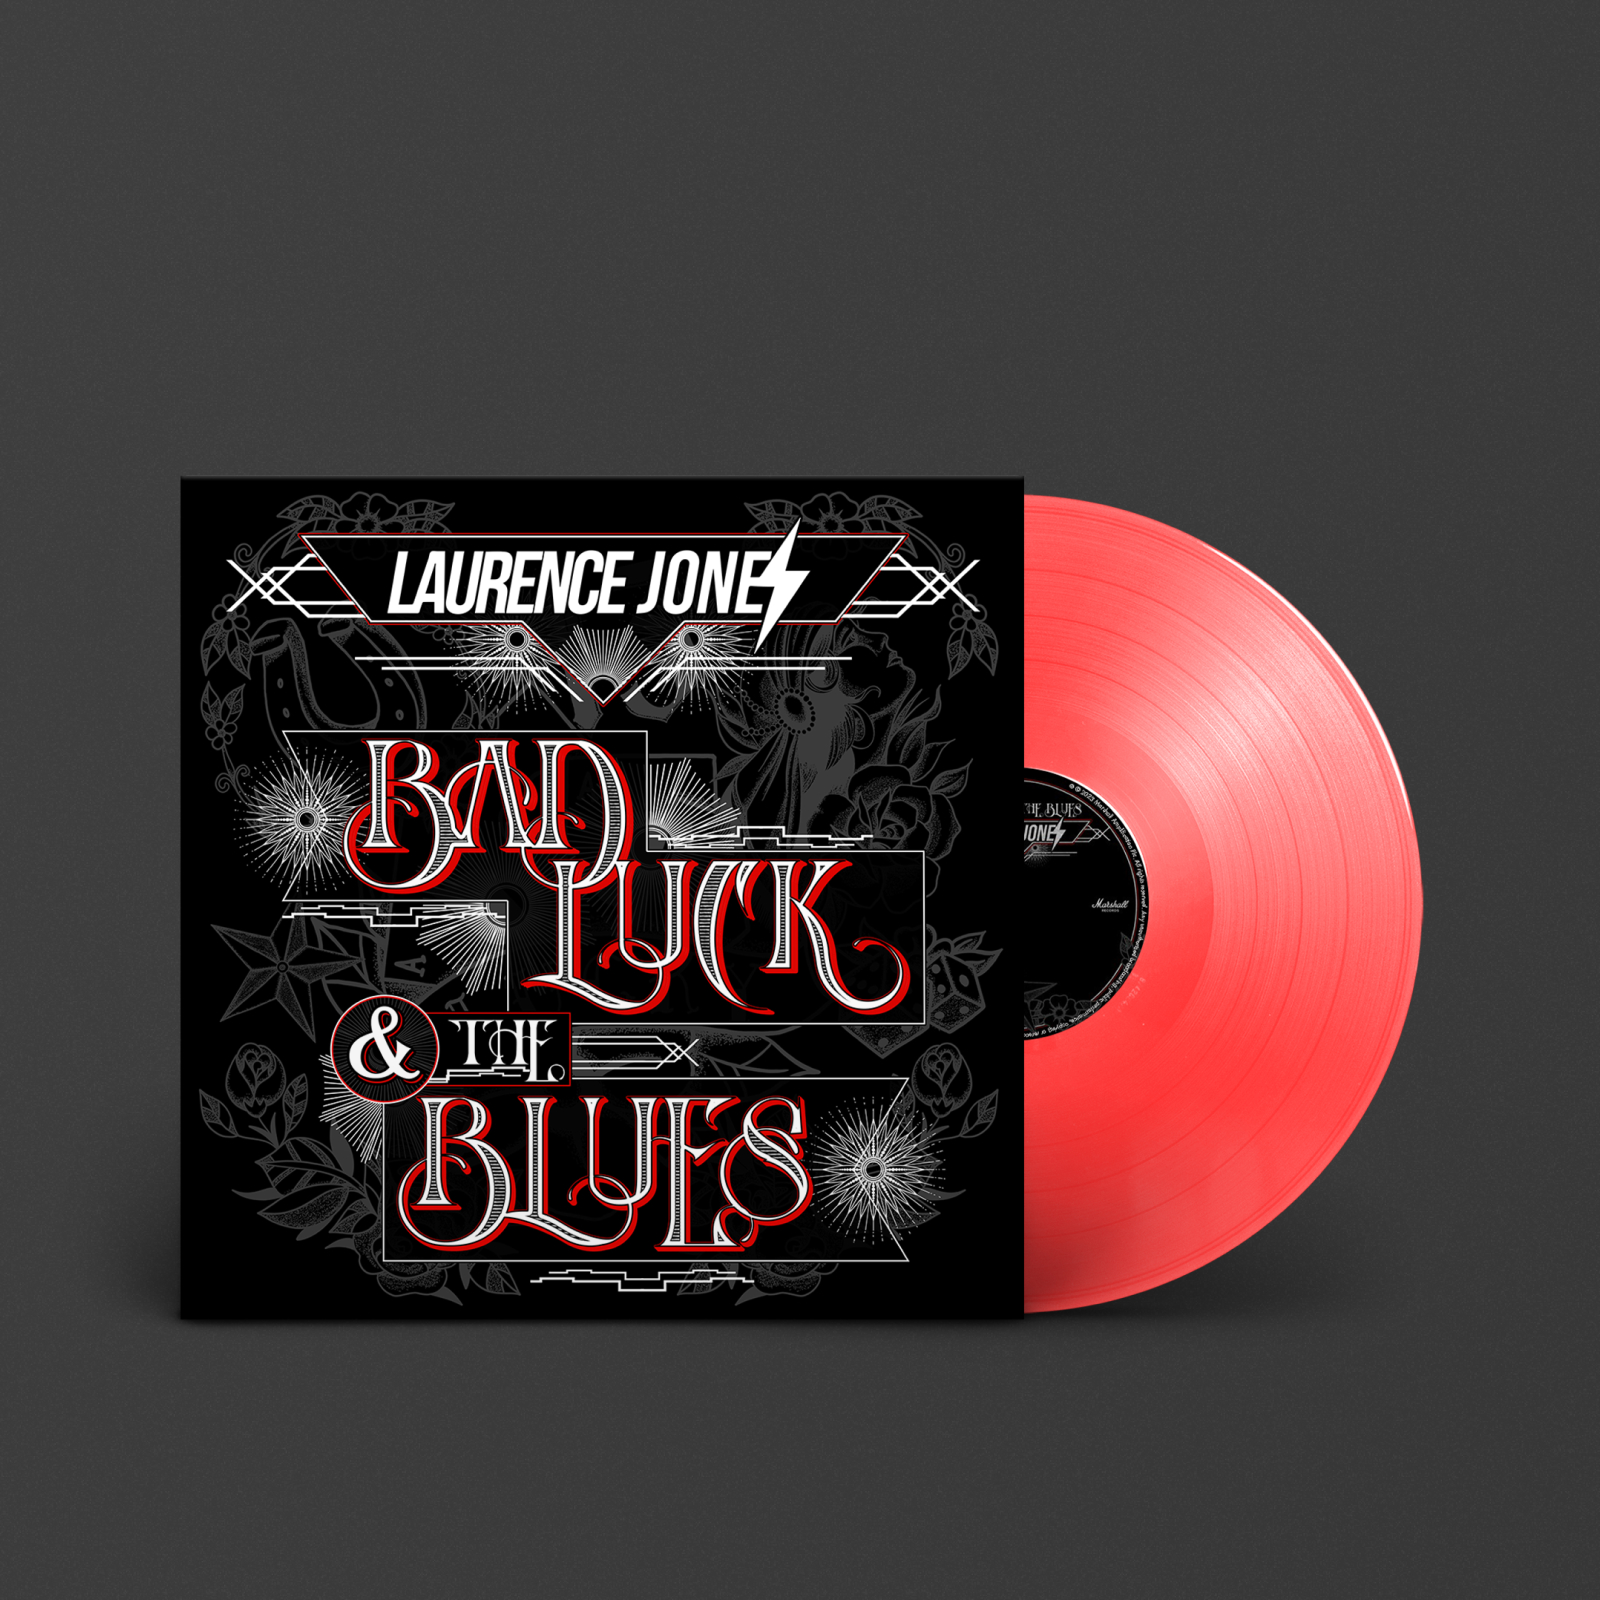 Imagen de un vinilo rojo titulado "Bad luck & the Blues" de Laurence Jones.